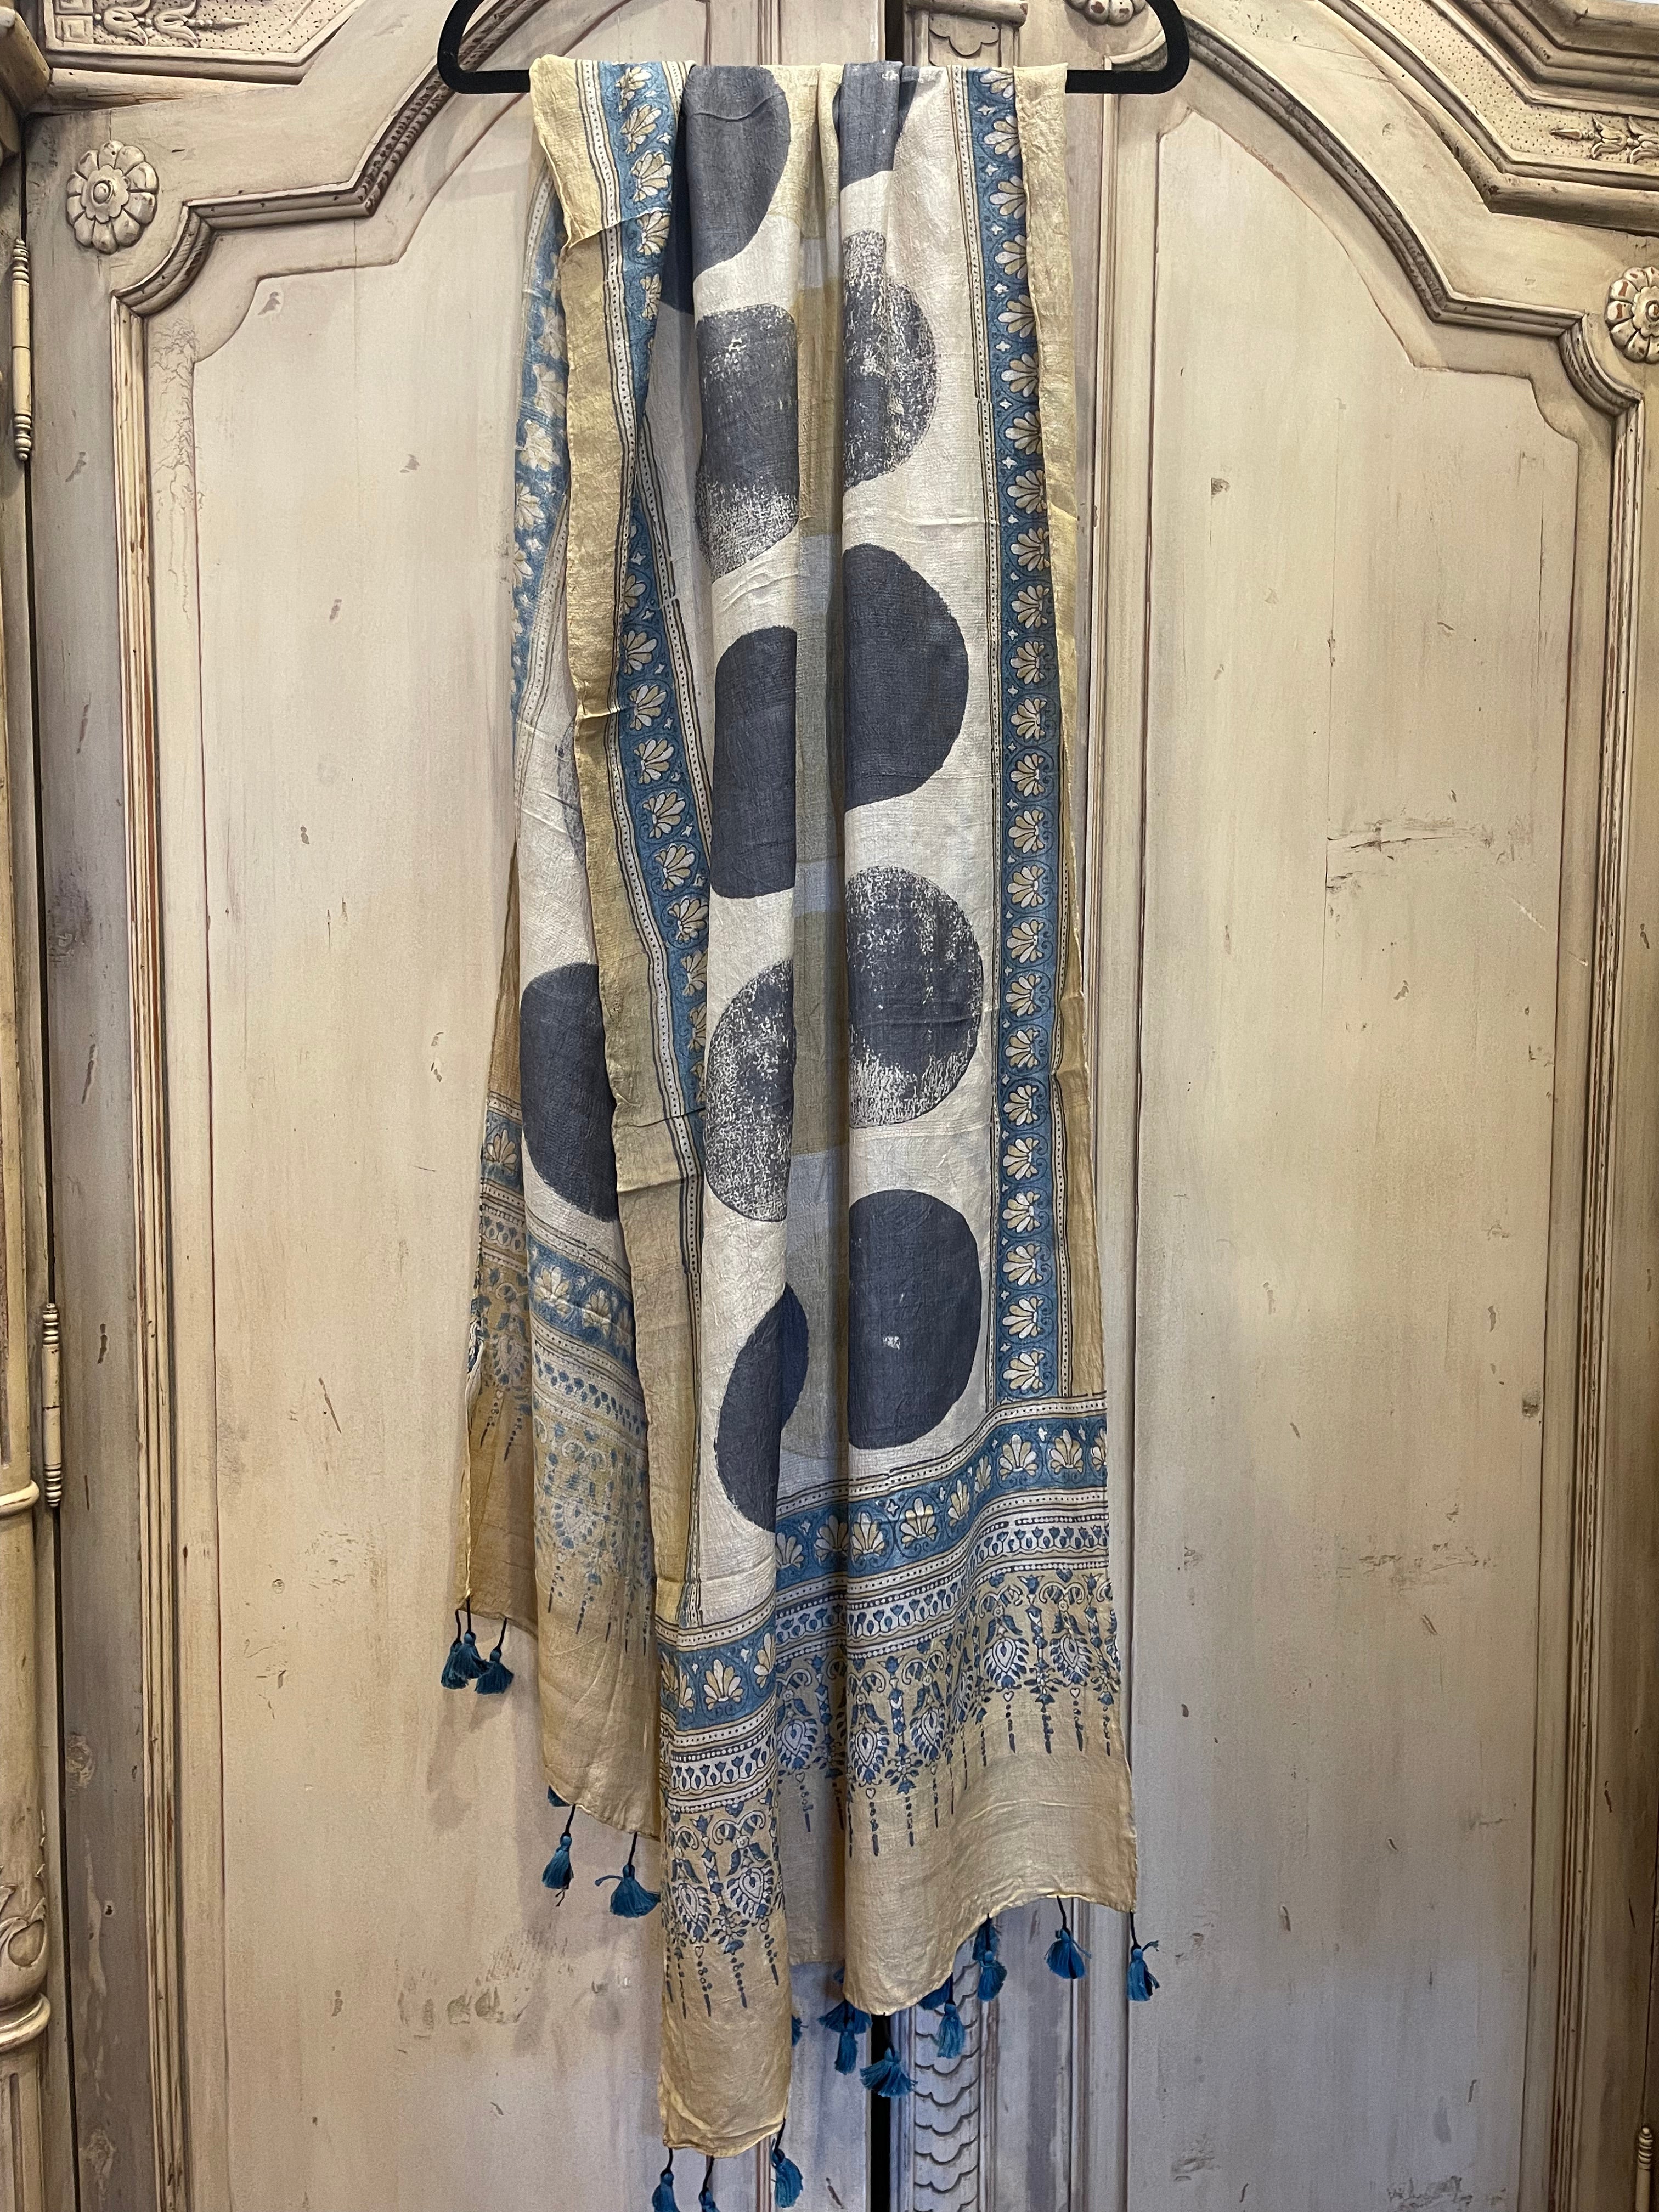 Ajrakh printed tussar silk scarves using natural dyes, Mustard Moon